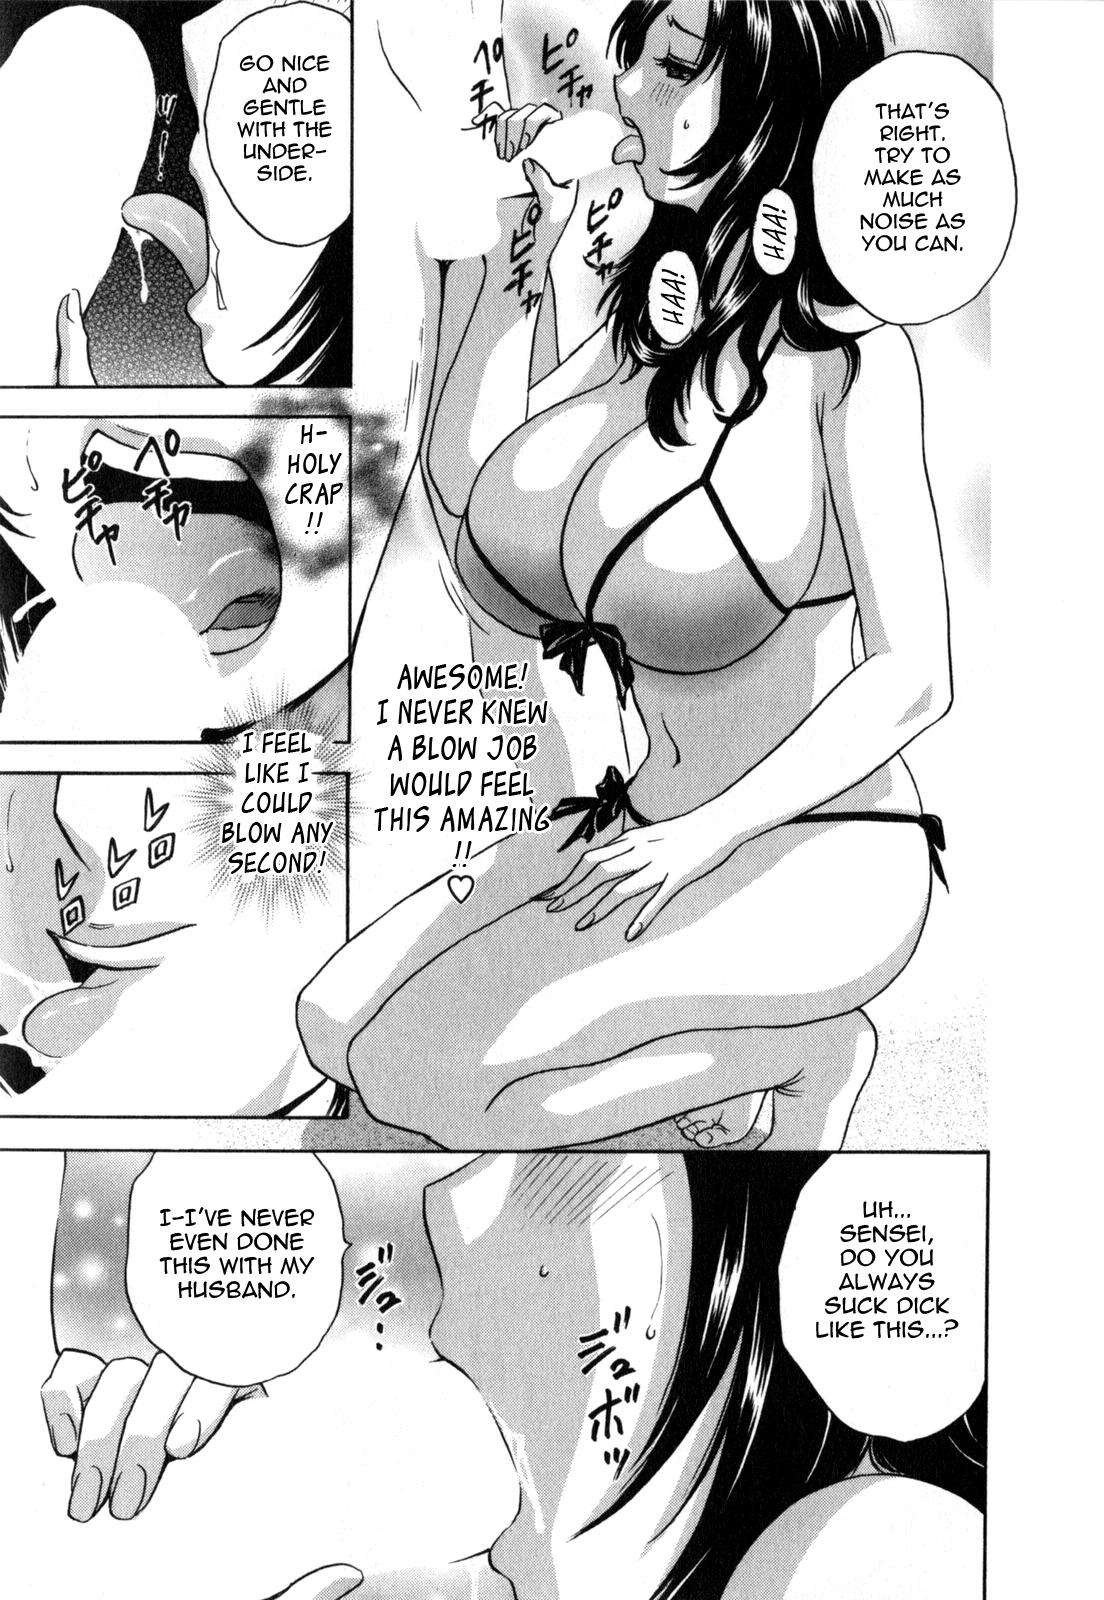 [Hidemaru] Life with Married Women Just Like a Manga 1 - Ch. 1-5 [English] {Tadanohito} 18